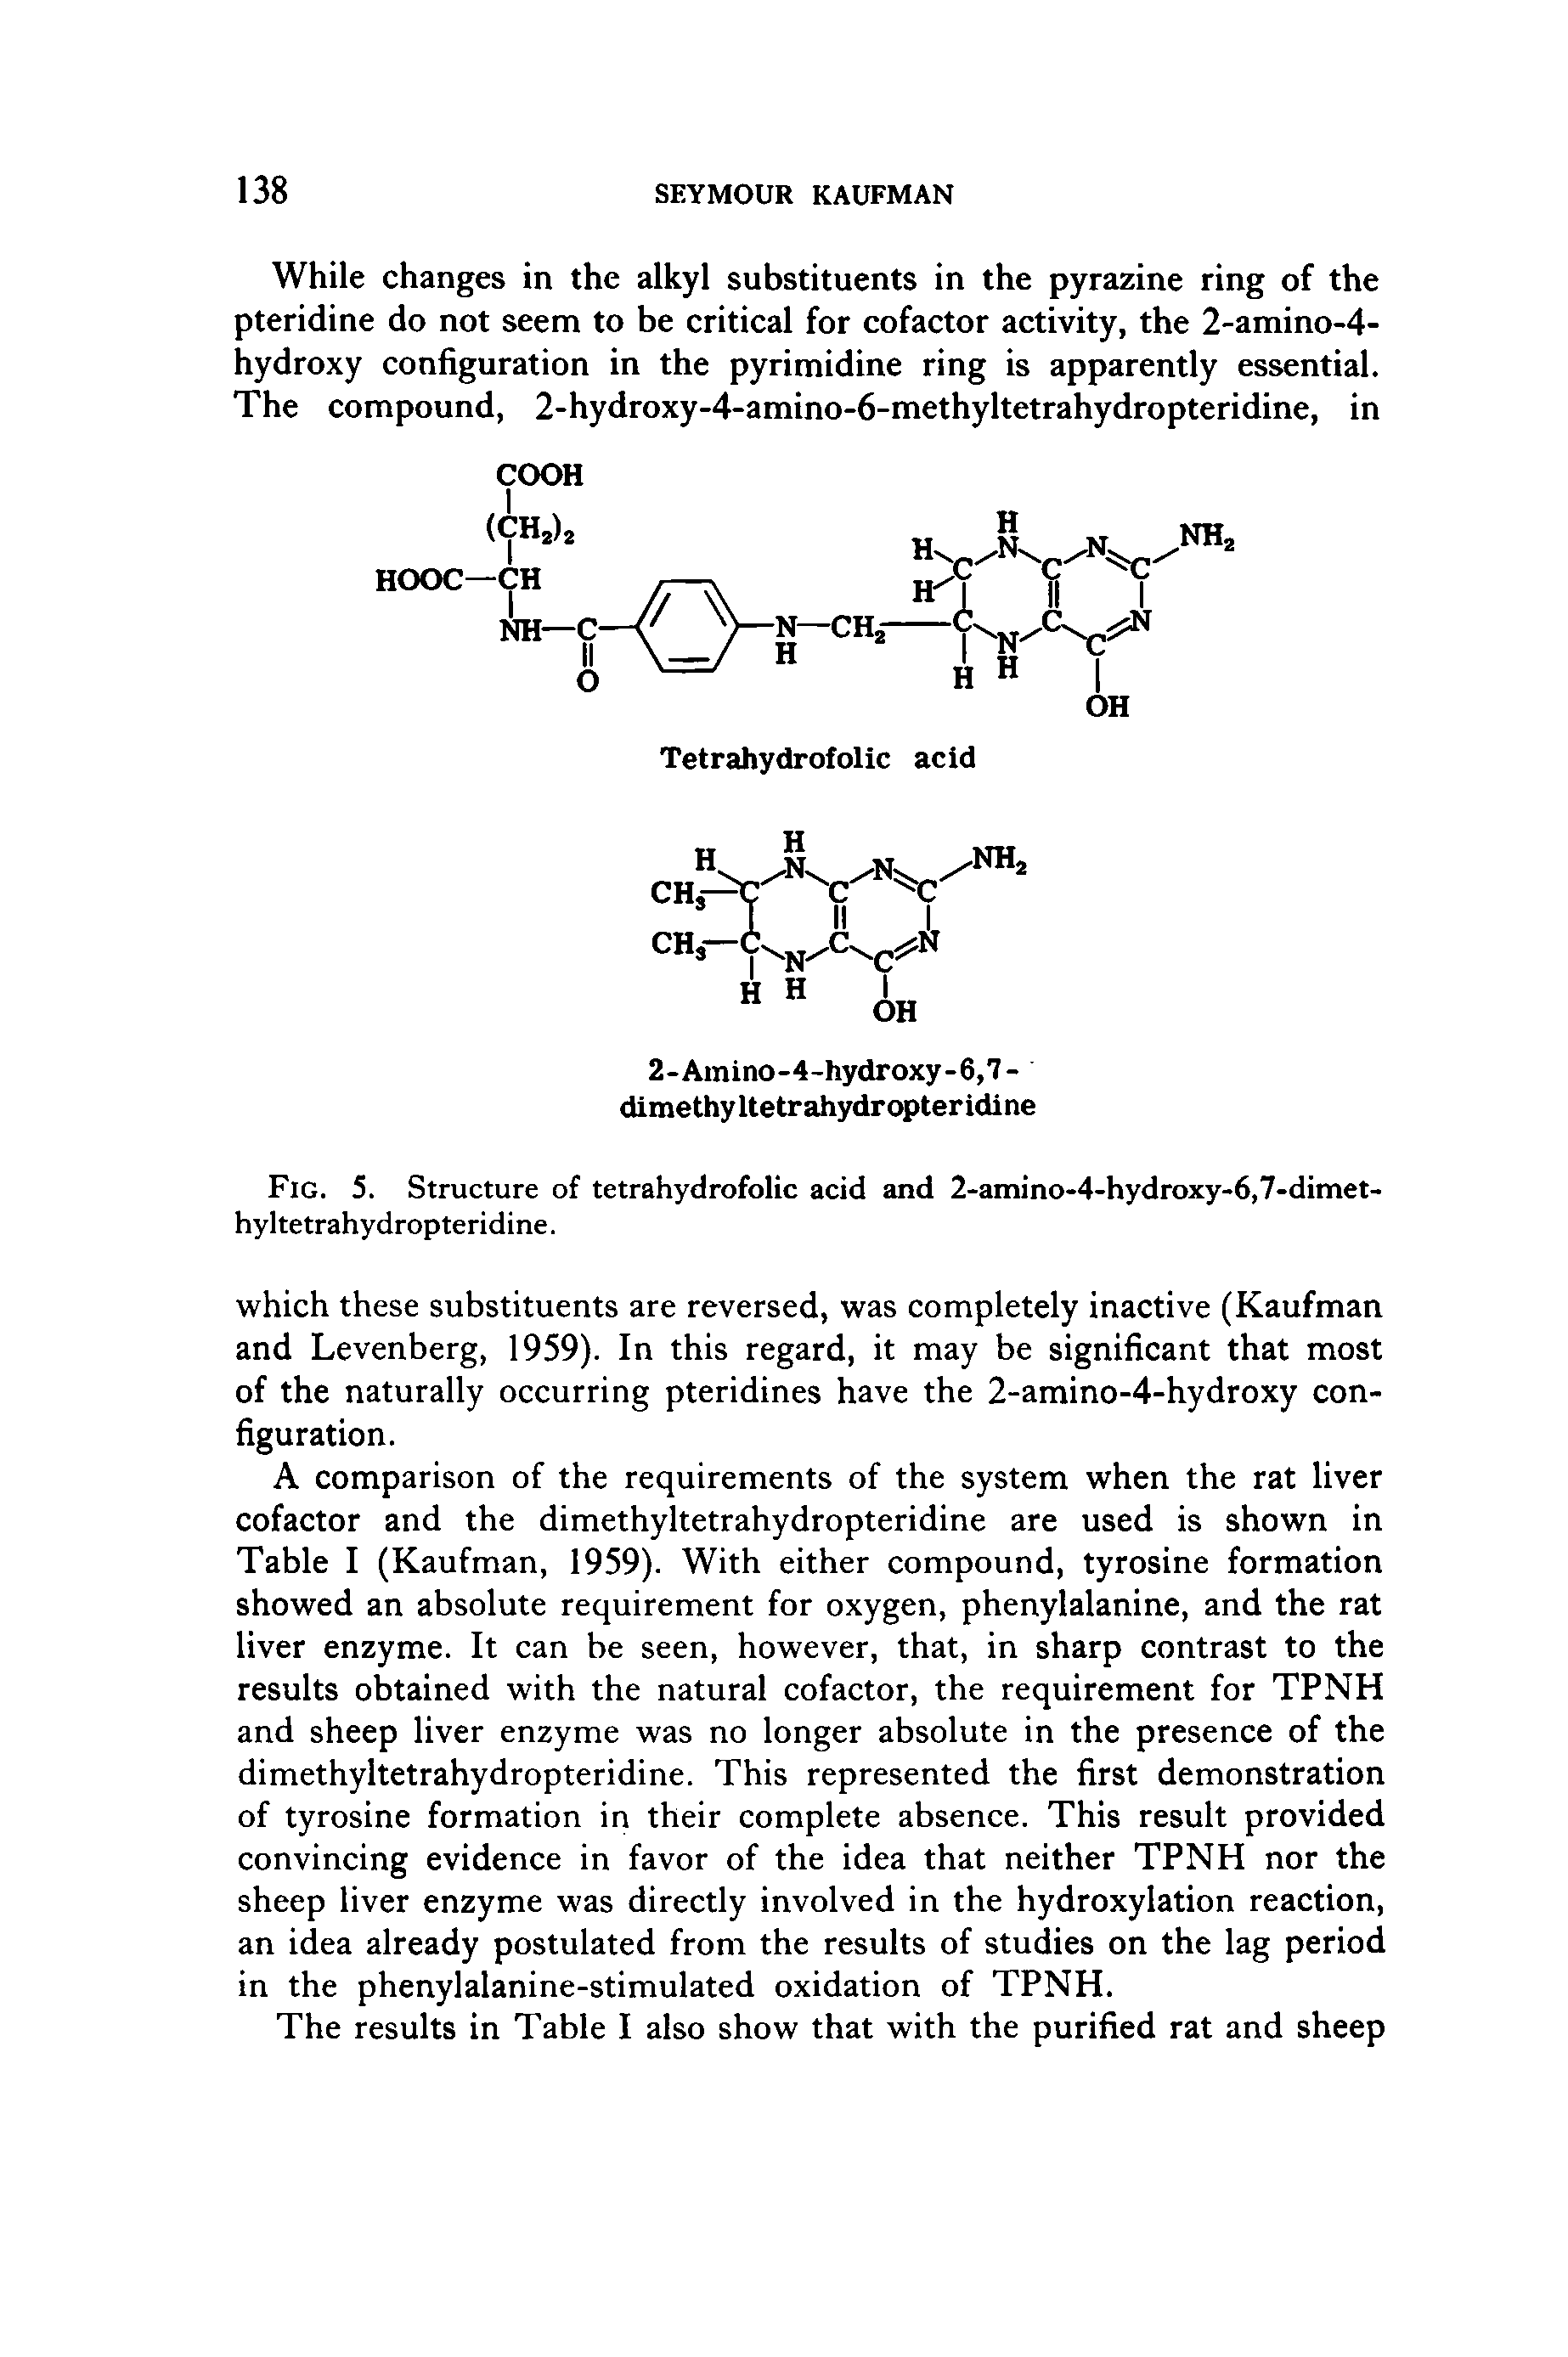 Fig. 5. Structure of tetrahydrofolic acid and 2-amino-4-hydroxy-6,7-dimet-hyltetrahydropteridine.